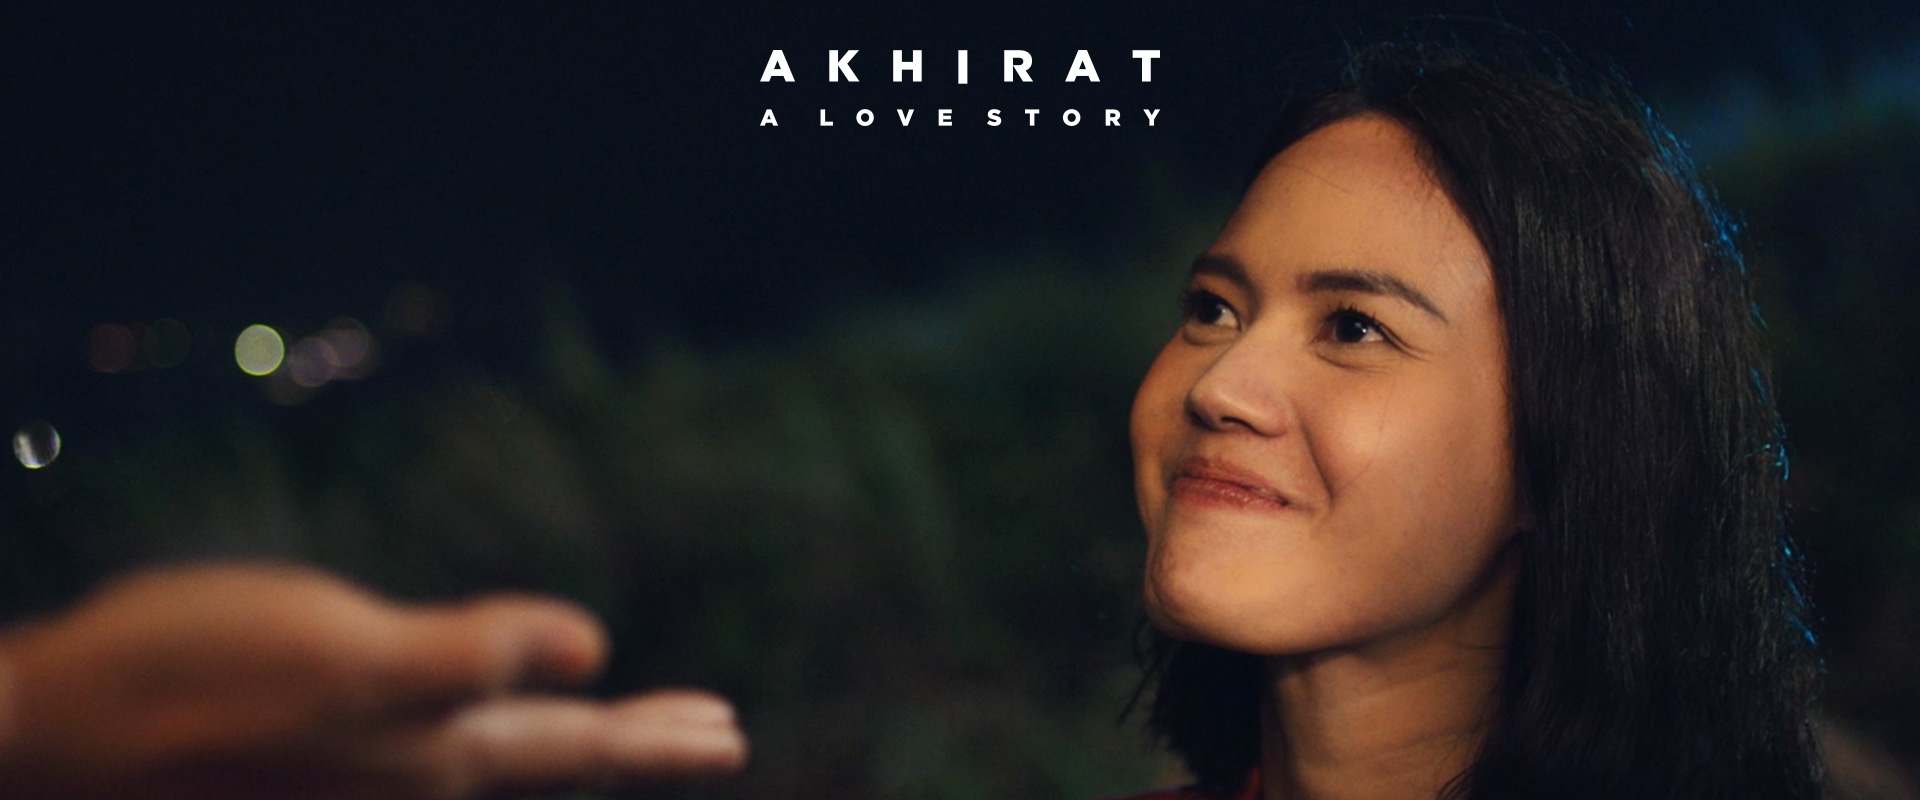 Akhirat: A Love Story background 1